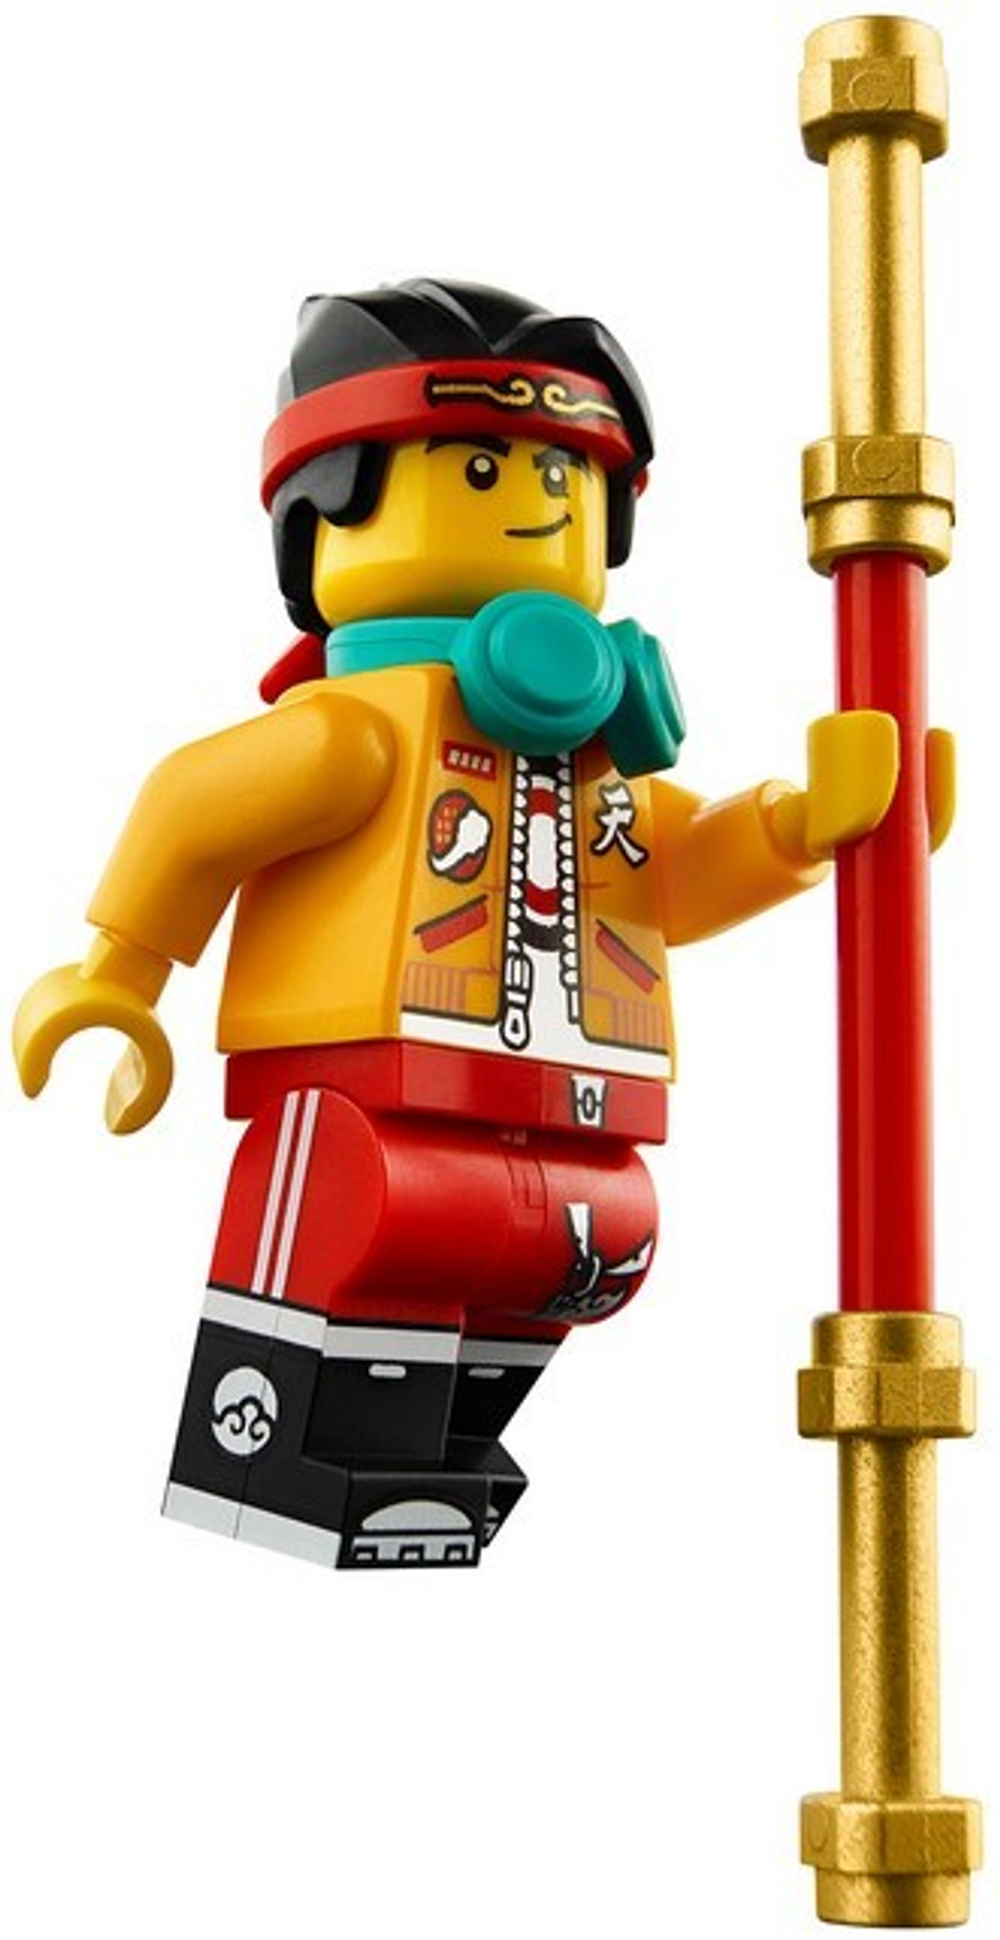 LEGO Monkie Kid: Царь быков 80010 — Demon Bull King — Лего Манки Кид